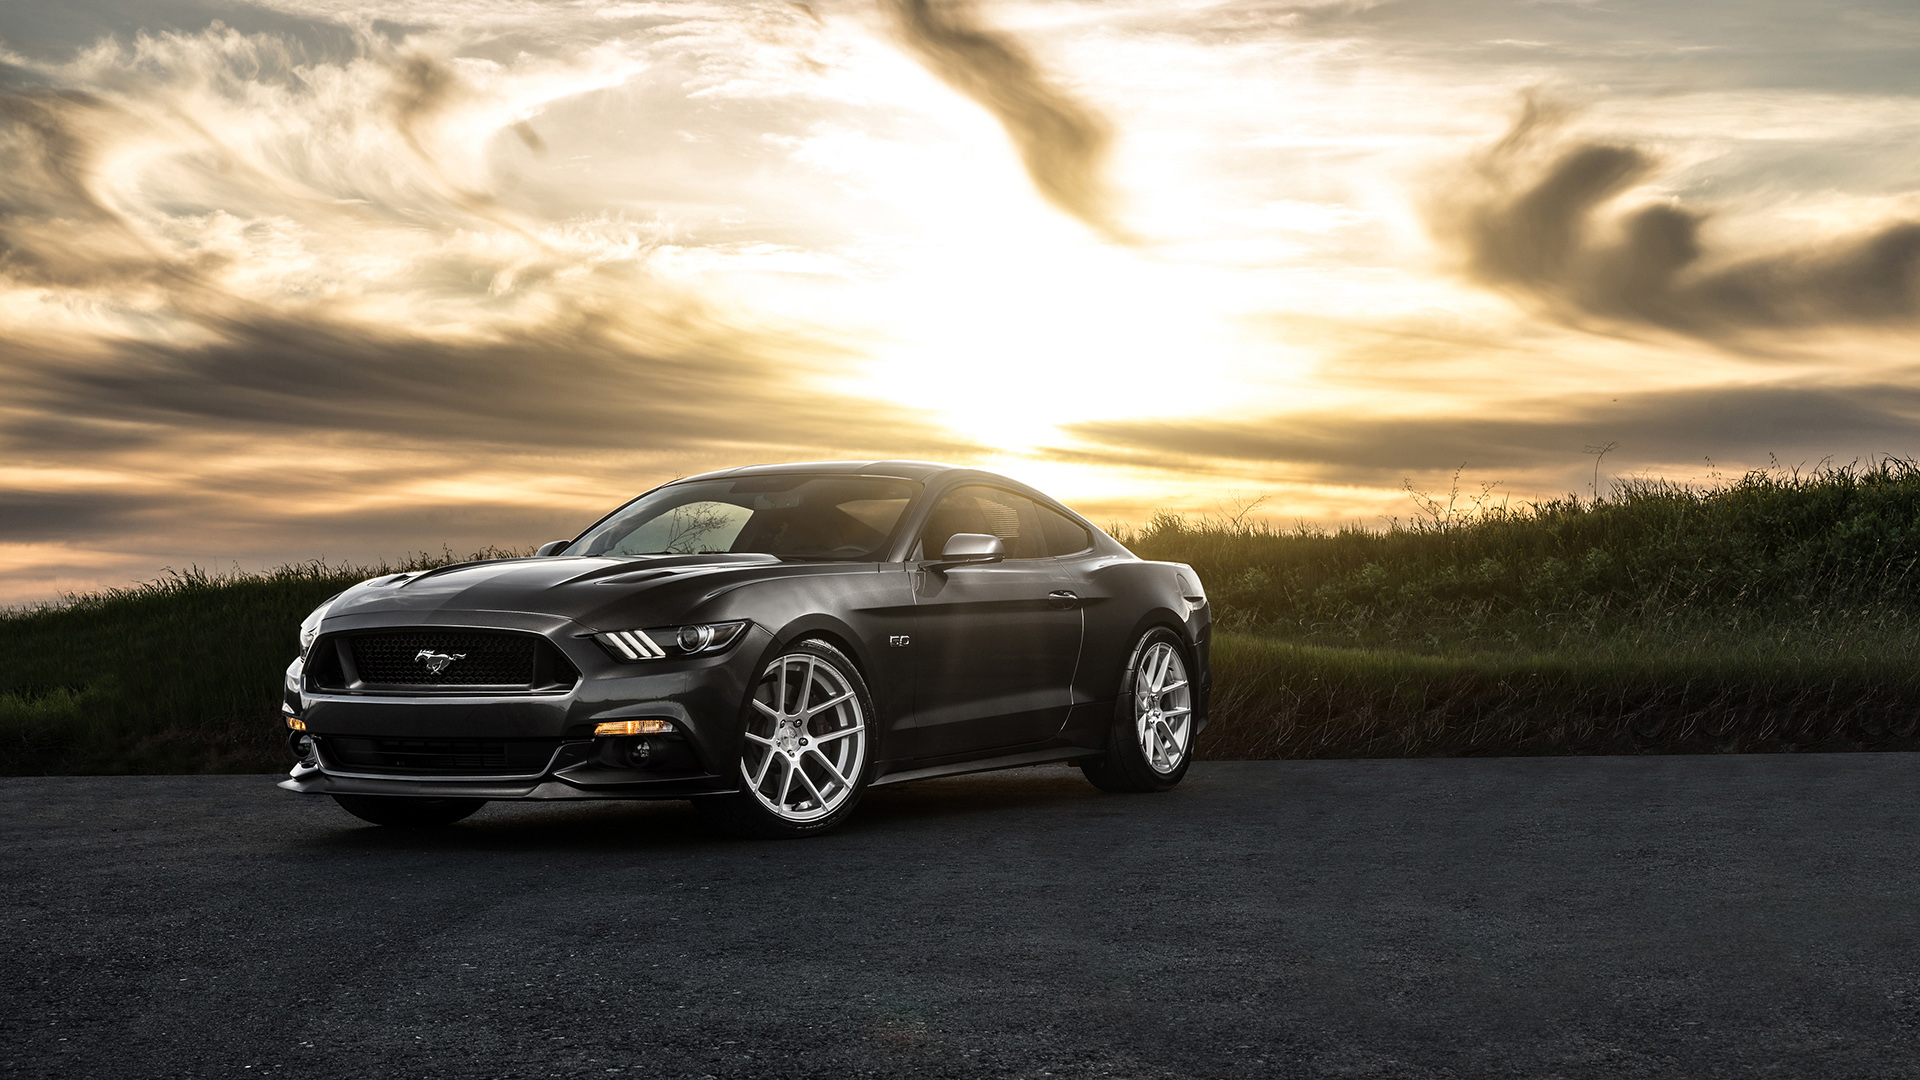 Ford Mustang 2015 Avant Garde Wallpaper | HD Car ...
 2015 Ford Mustang Wallpaper Hd